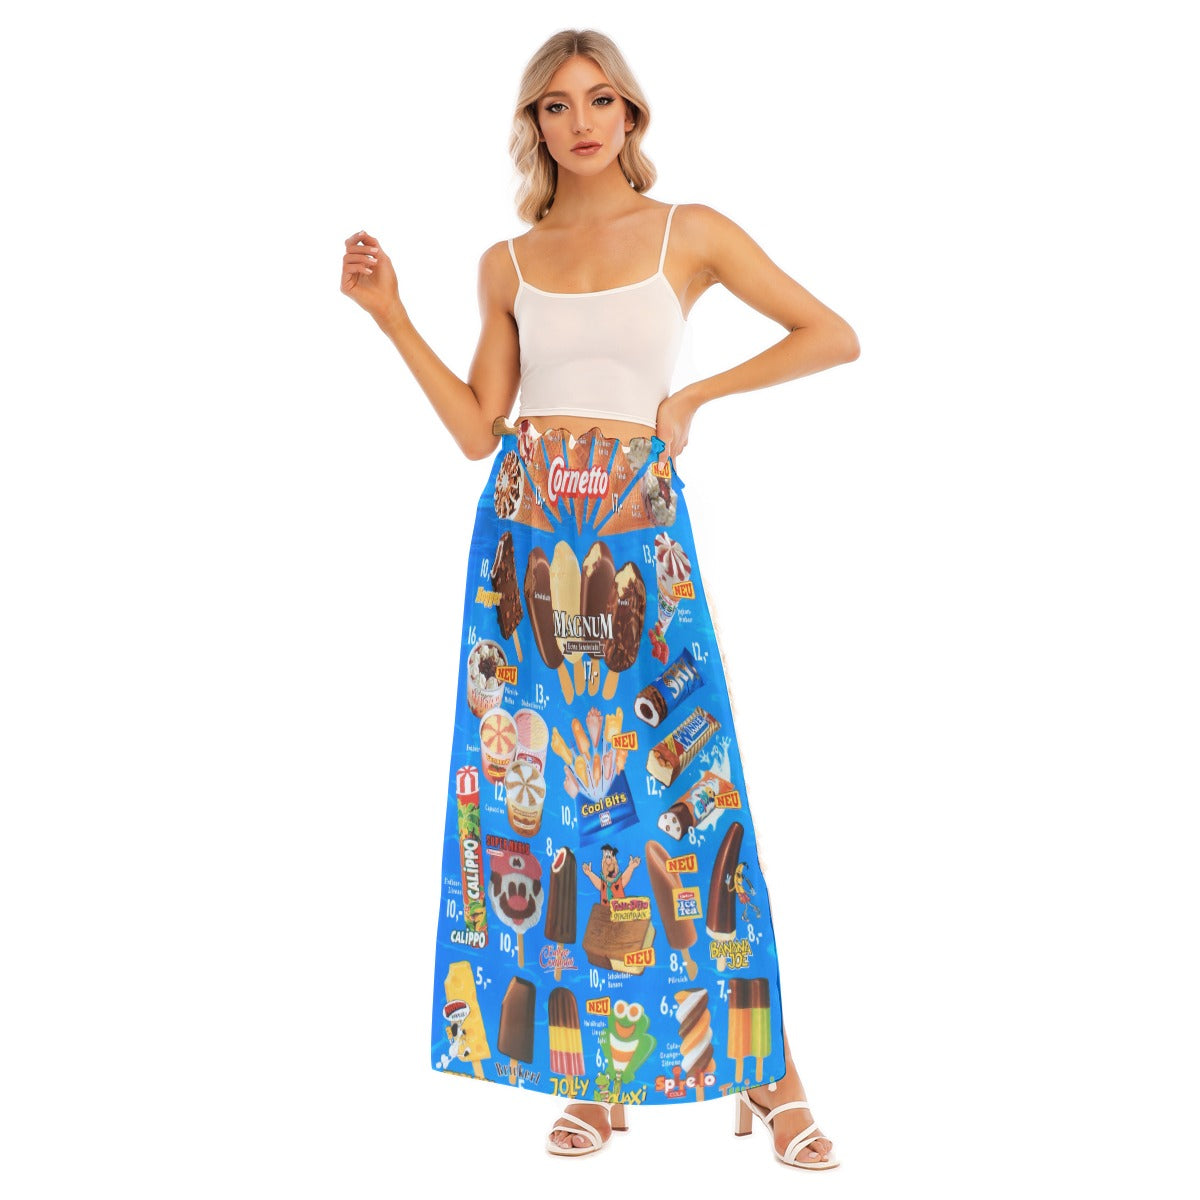 Vibrant tropical ice cream print skirt with side split